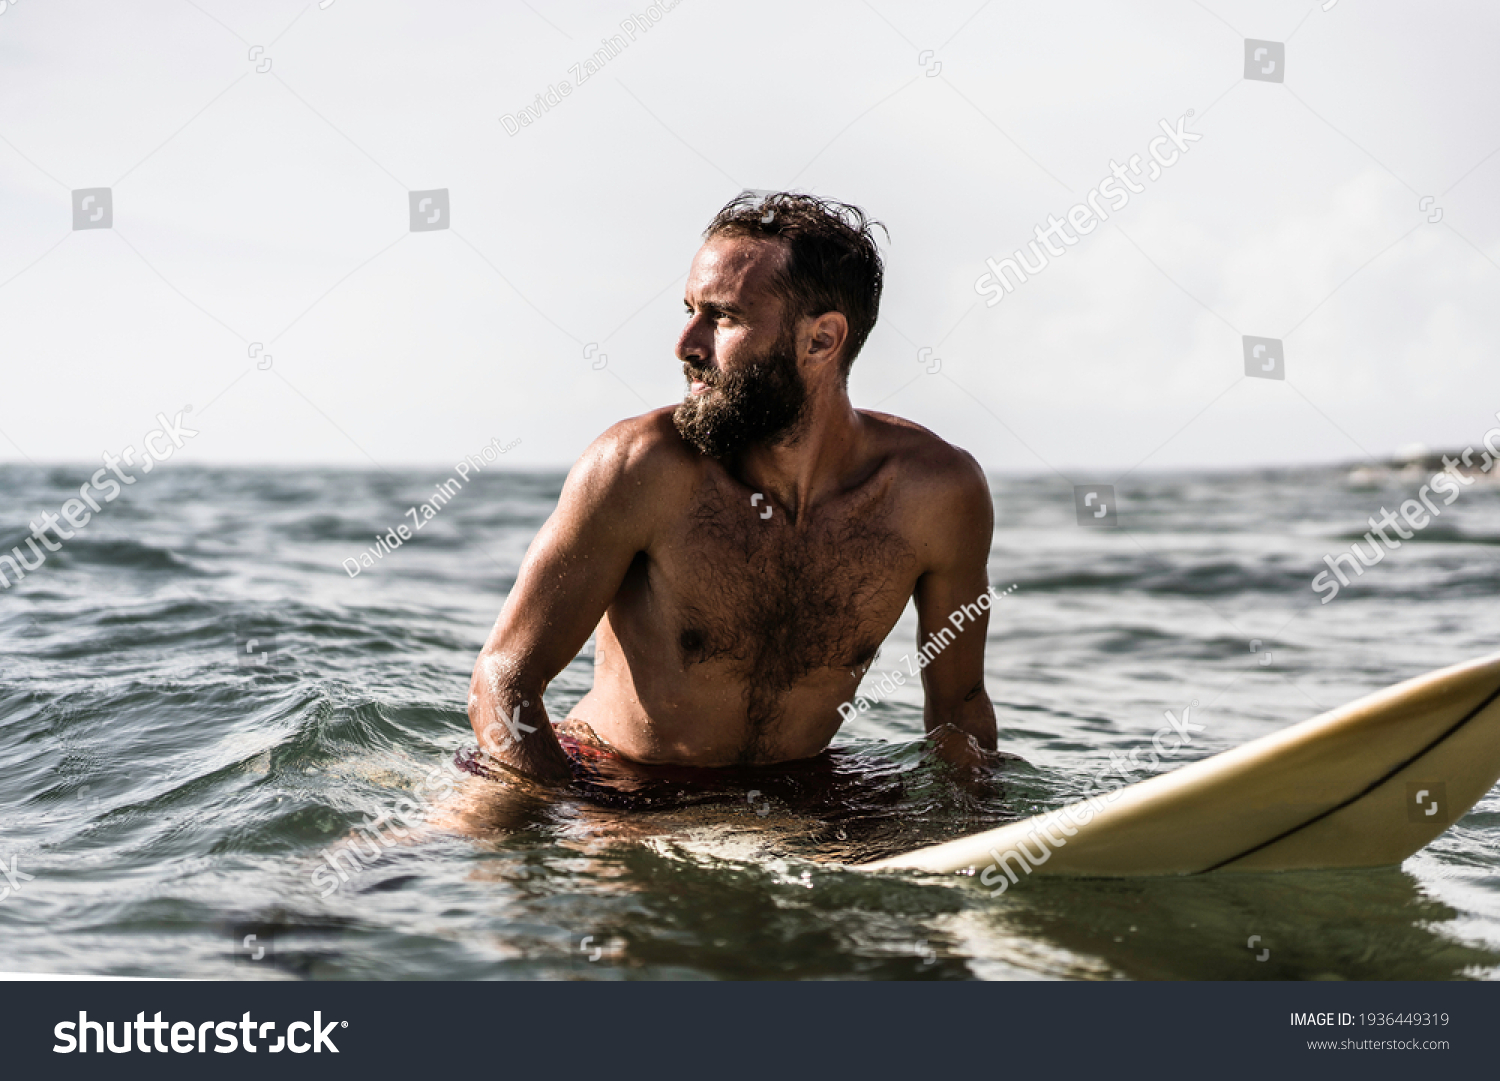 2,338 Beard surfer Images, Stock Photos & Vectors | Shutterstock